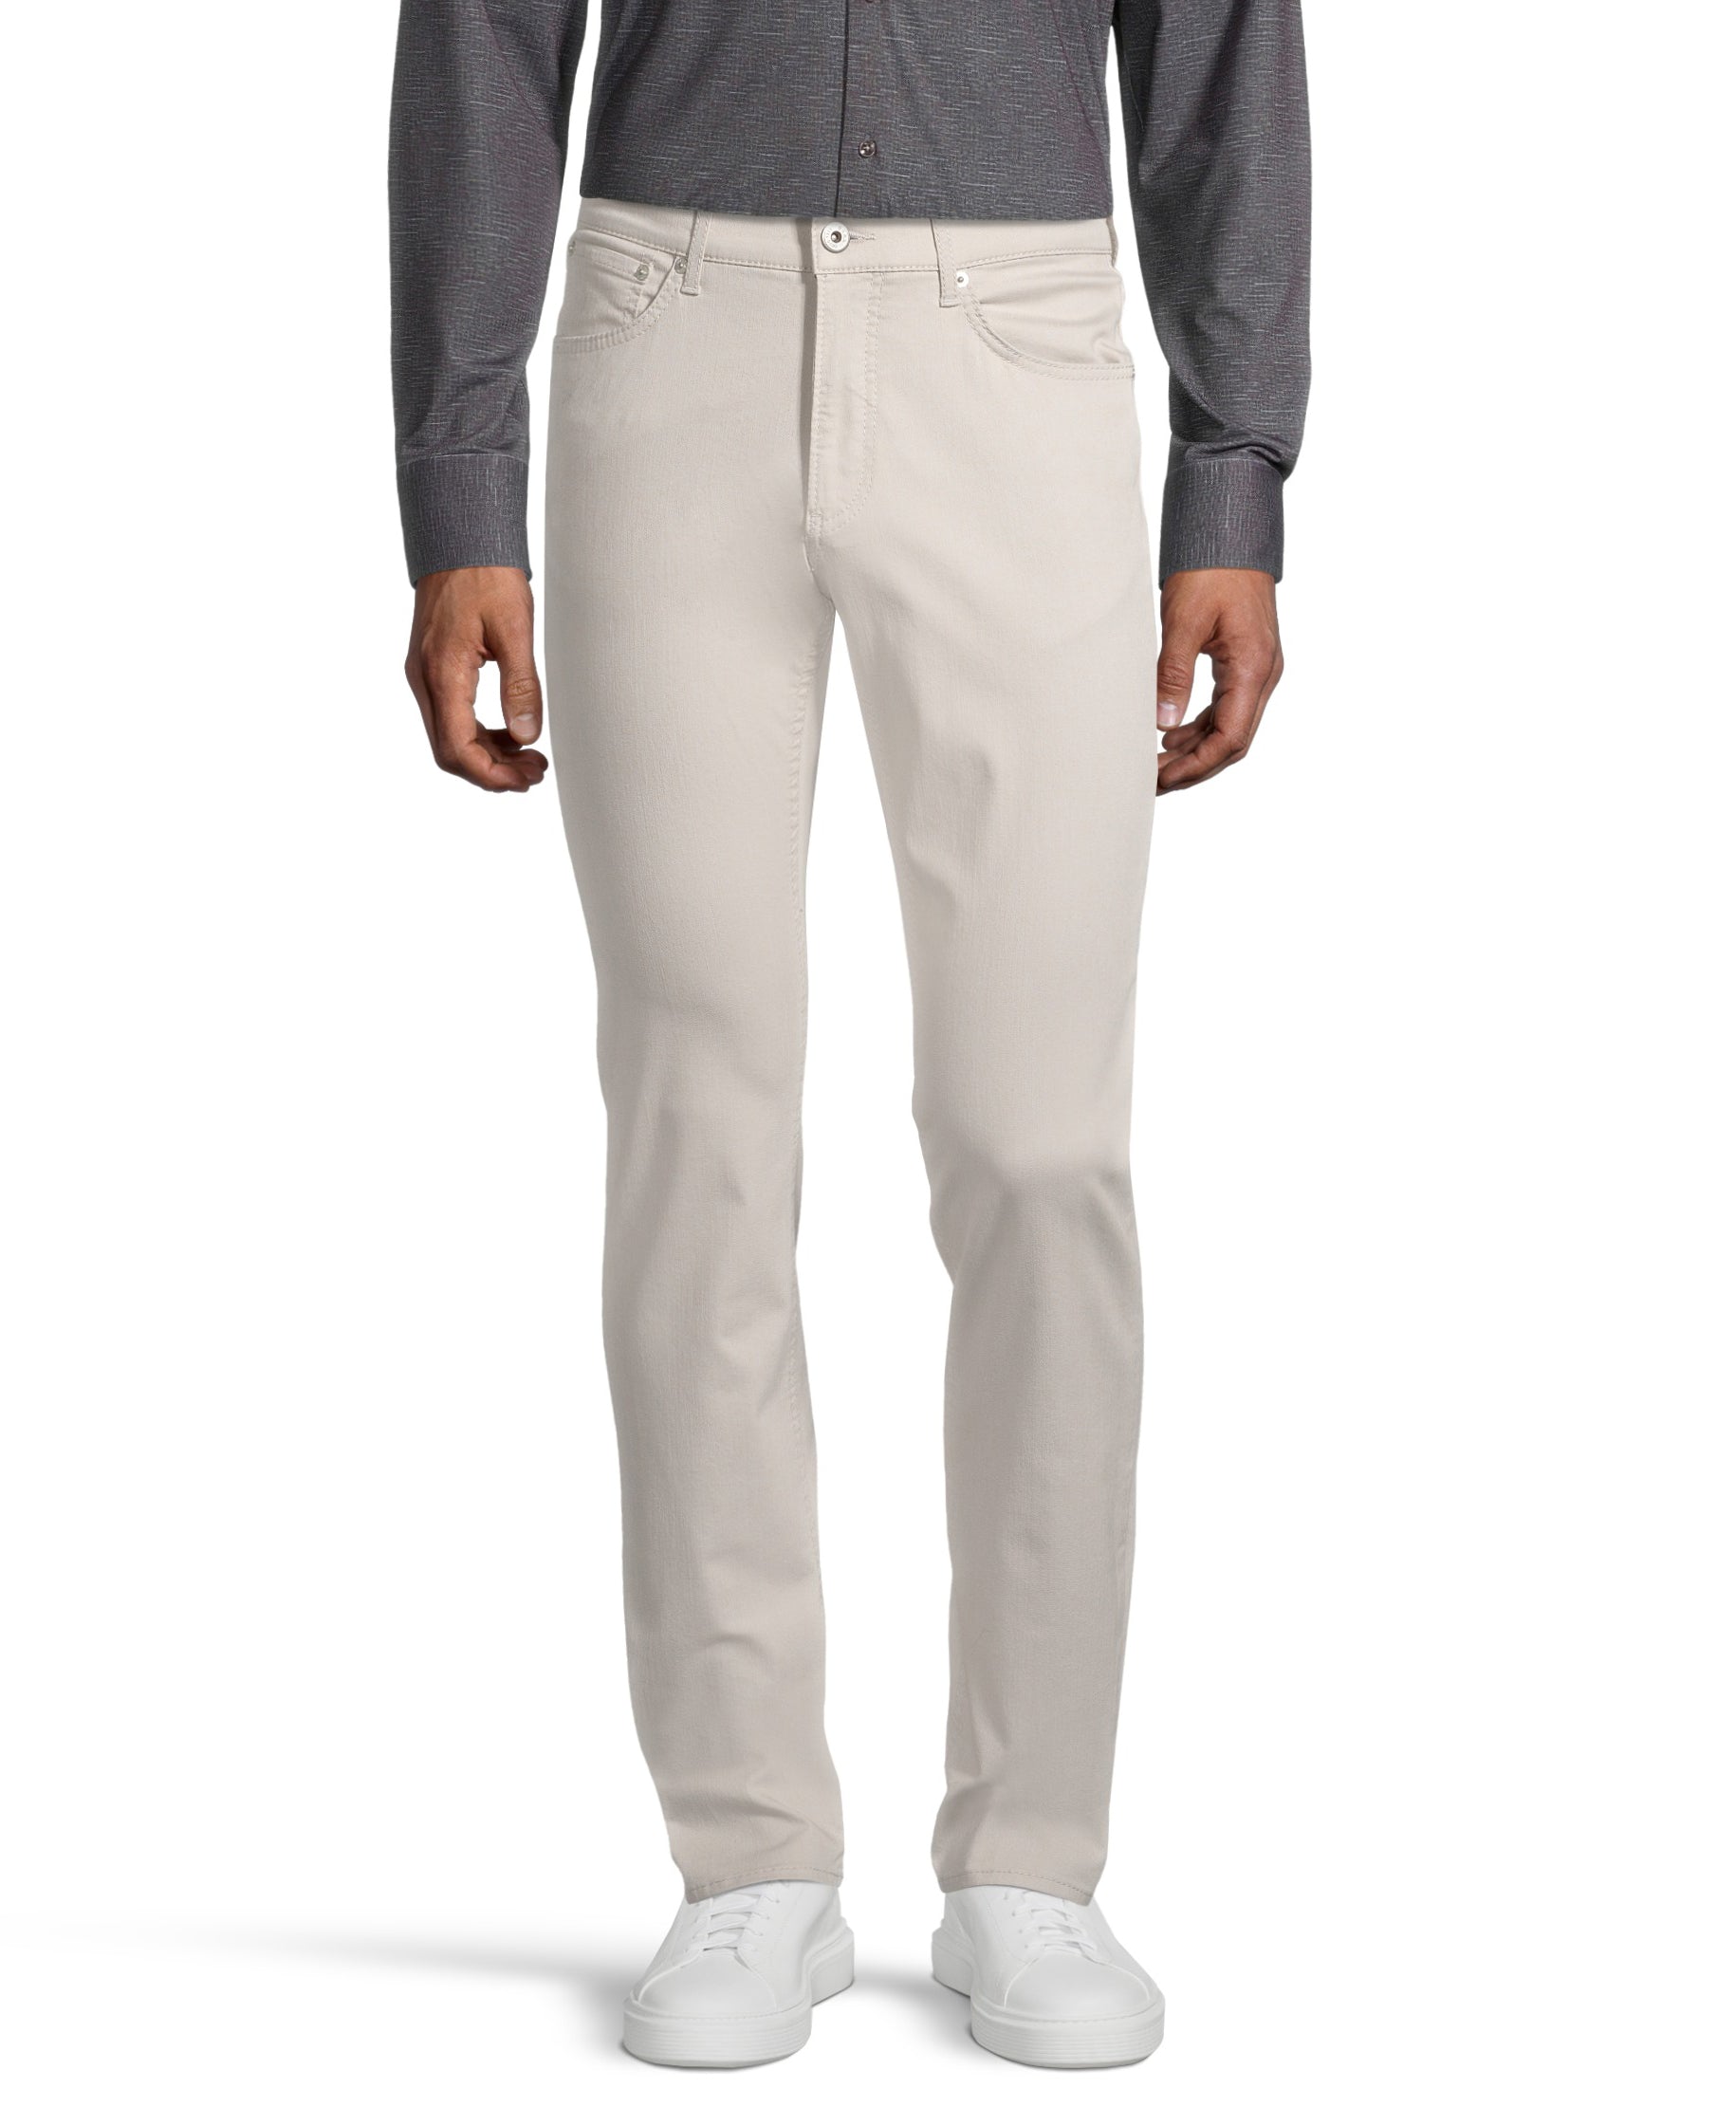 5 – BRAX Thread Pocket Fit Company Chuck Hi-Flex Modern Seattle Stretch Pants